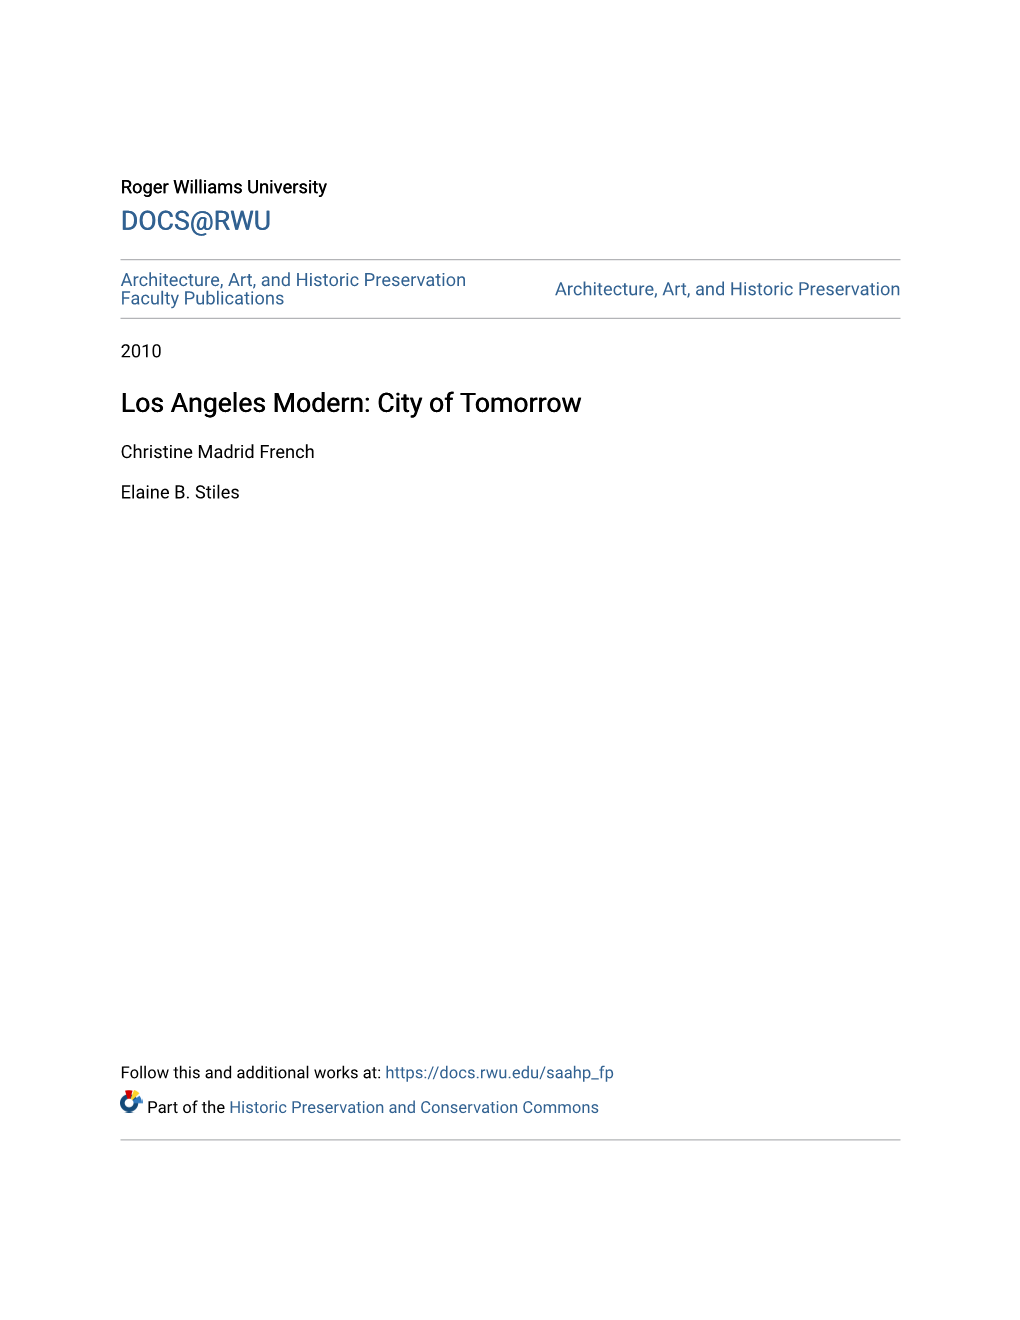 Los Angeles Modern: City of Tomorrow